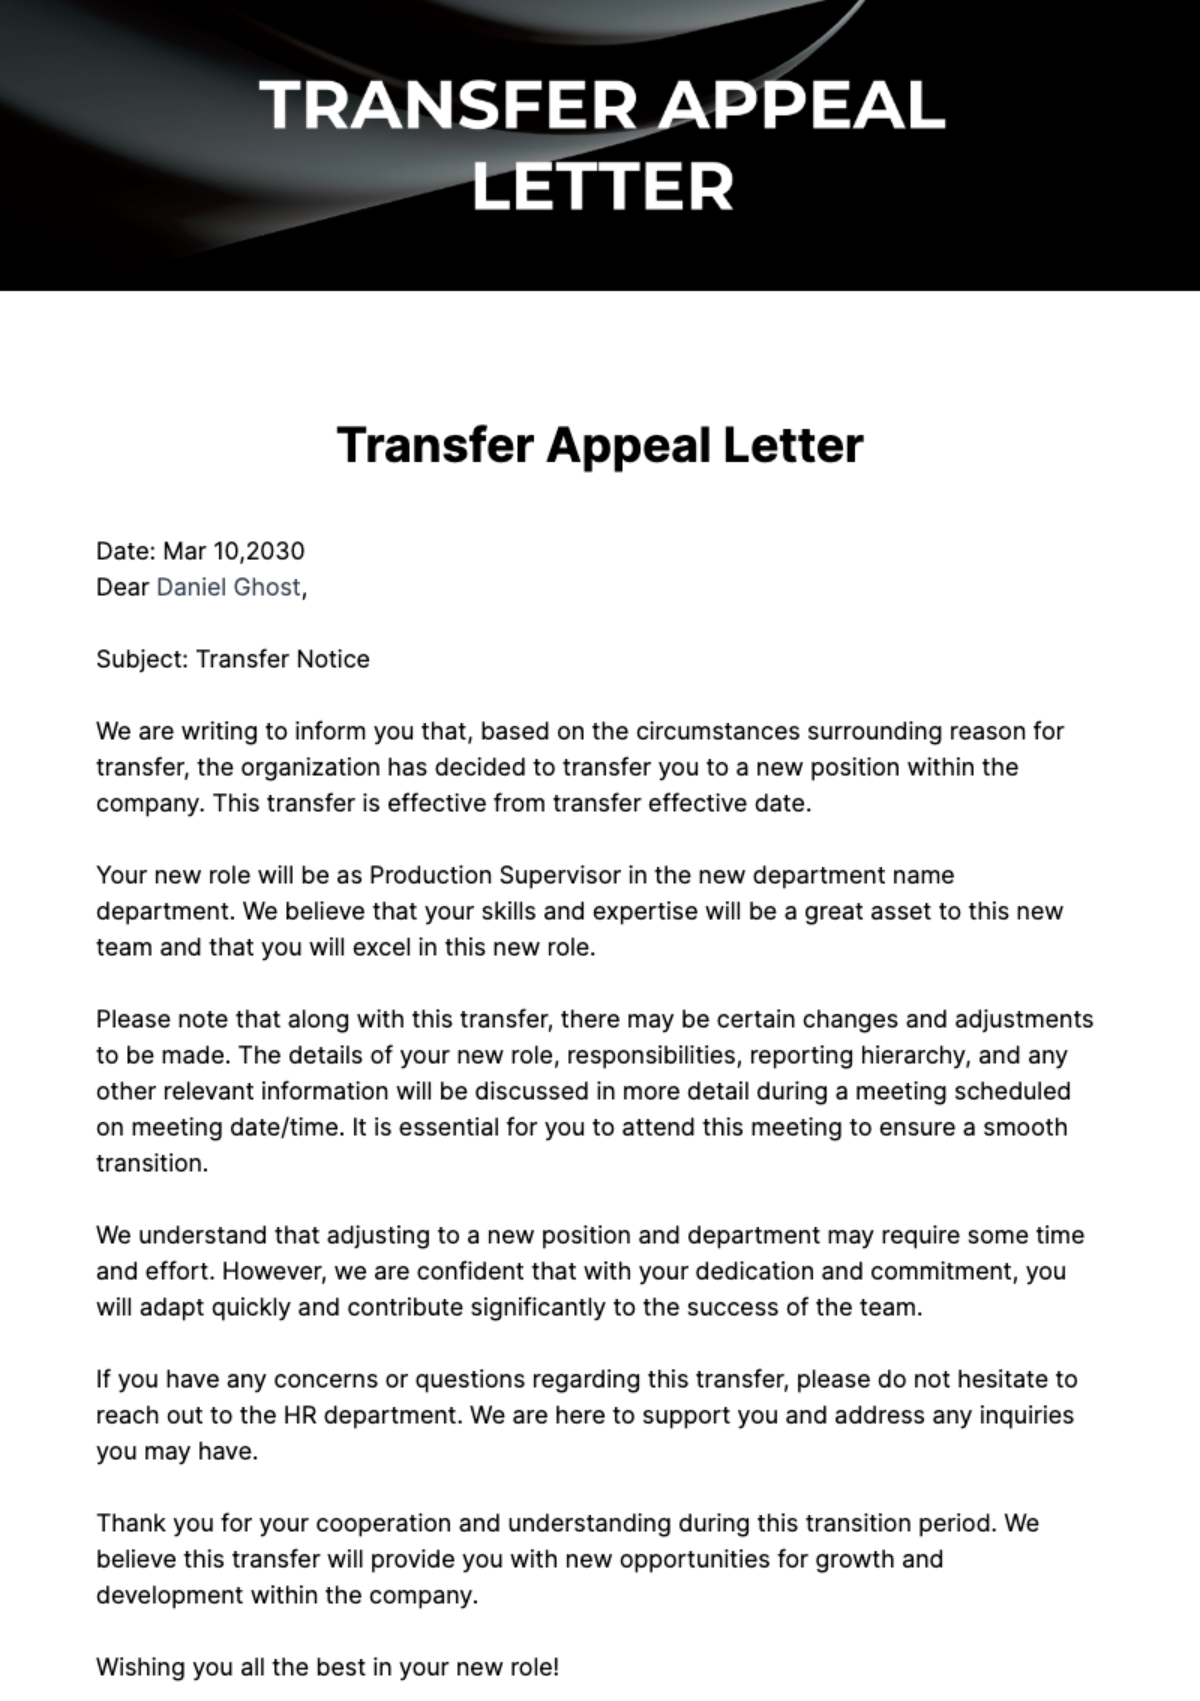 Transfer Appeal Letter Template